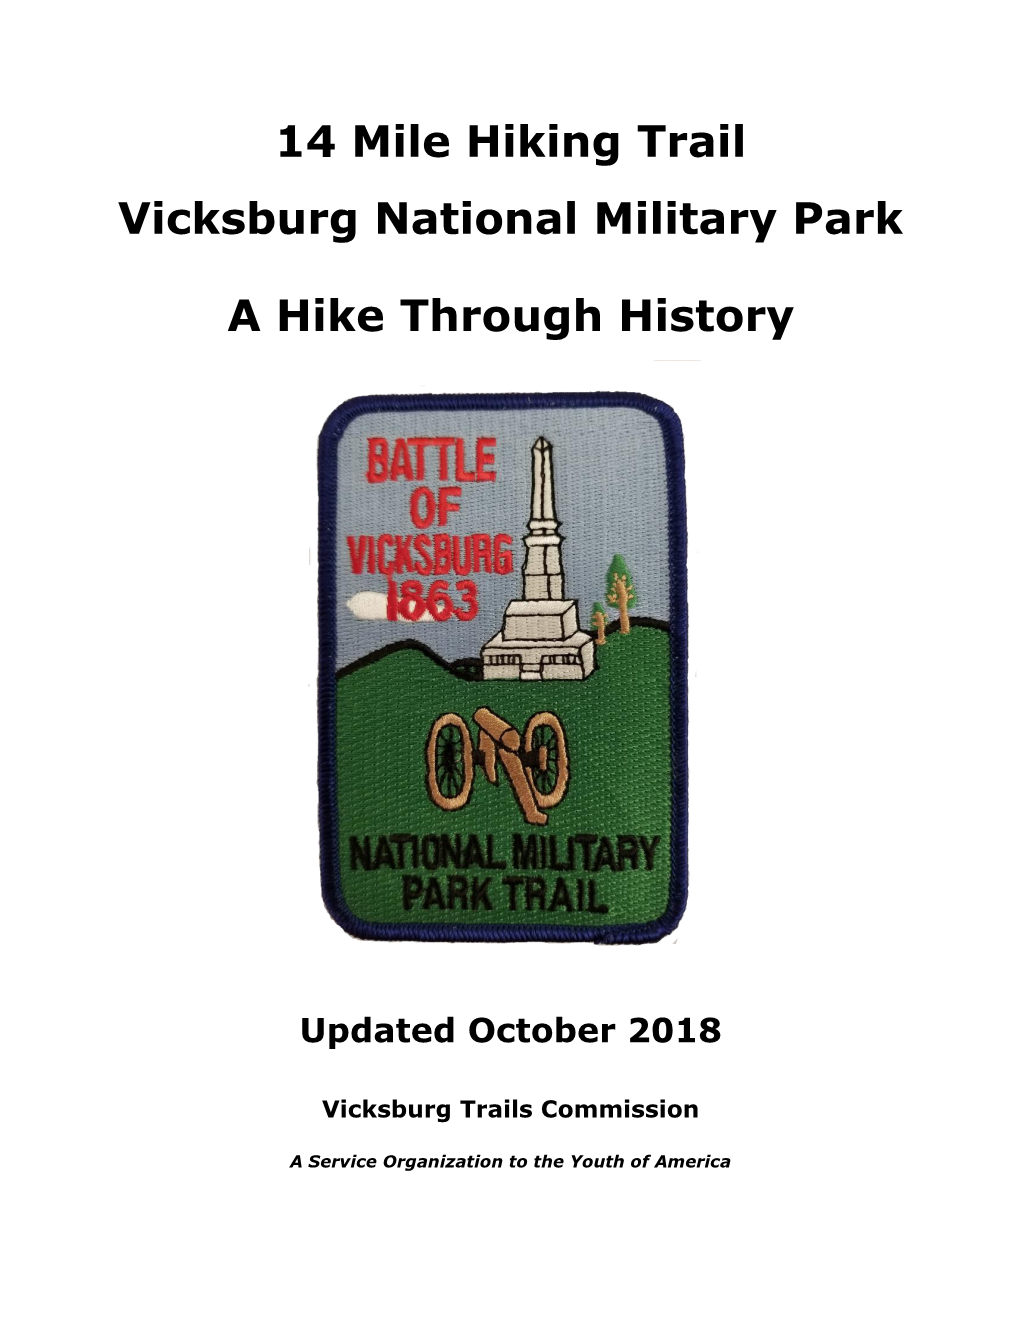 14 Mile Hiking Trail Vicksburg National Military Park a Hike Through History